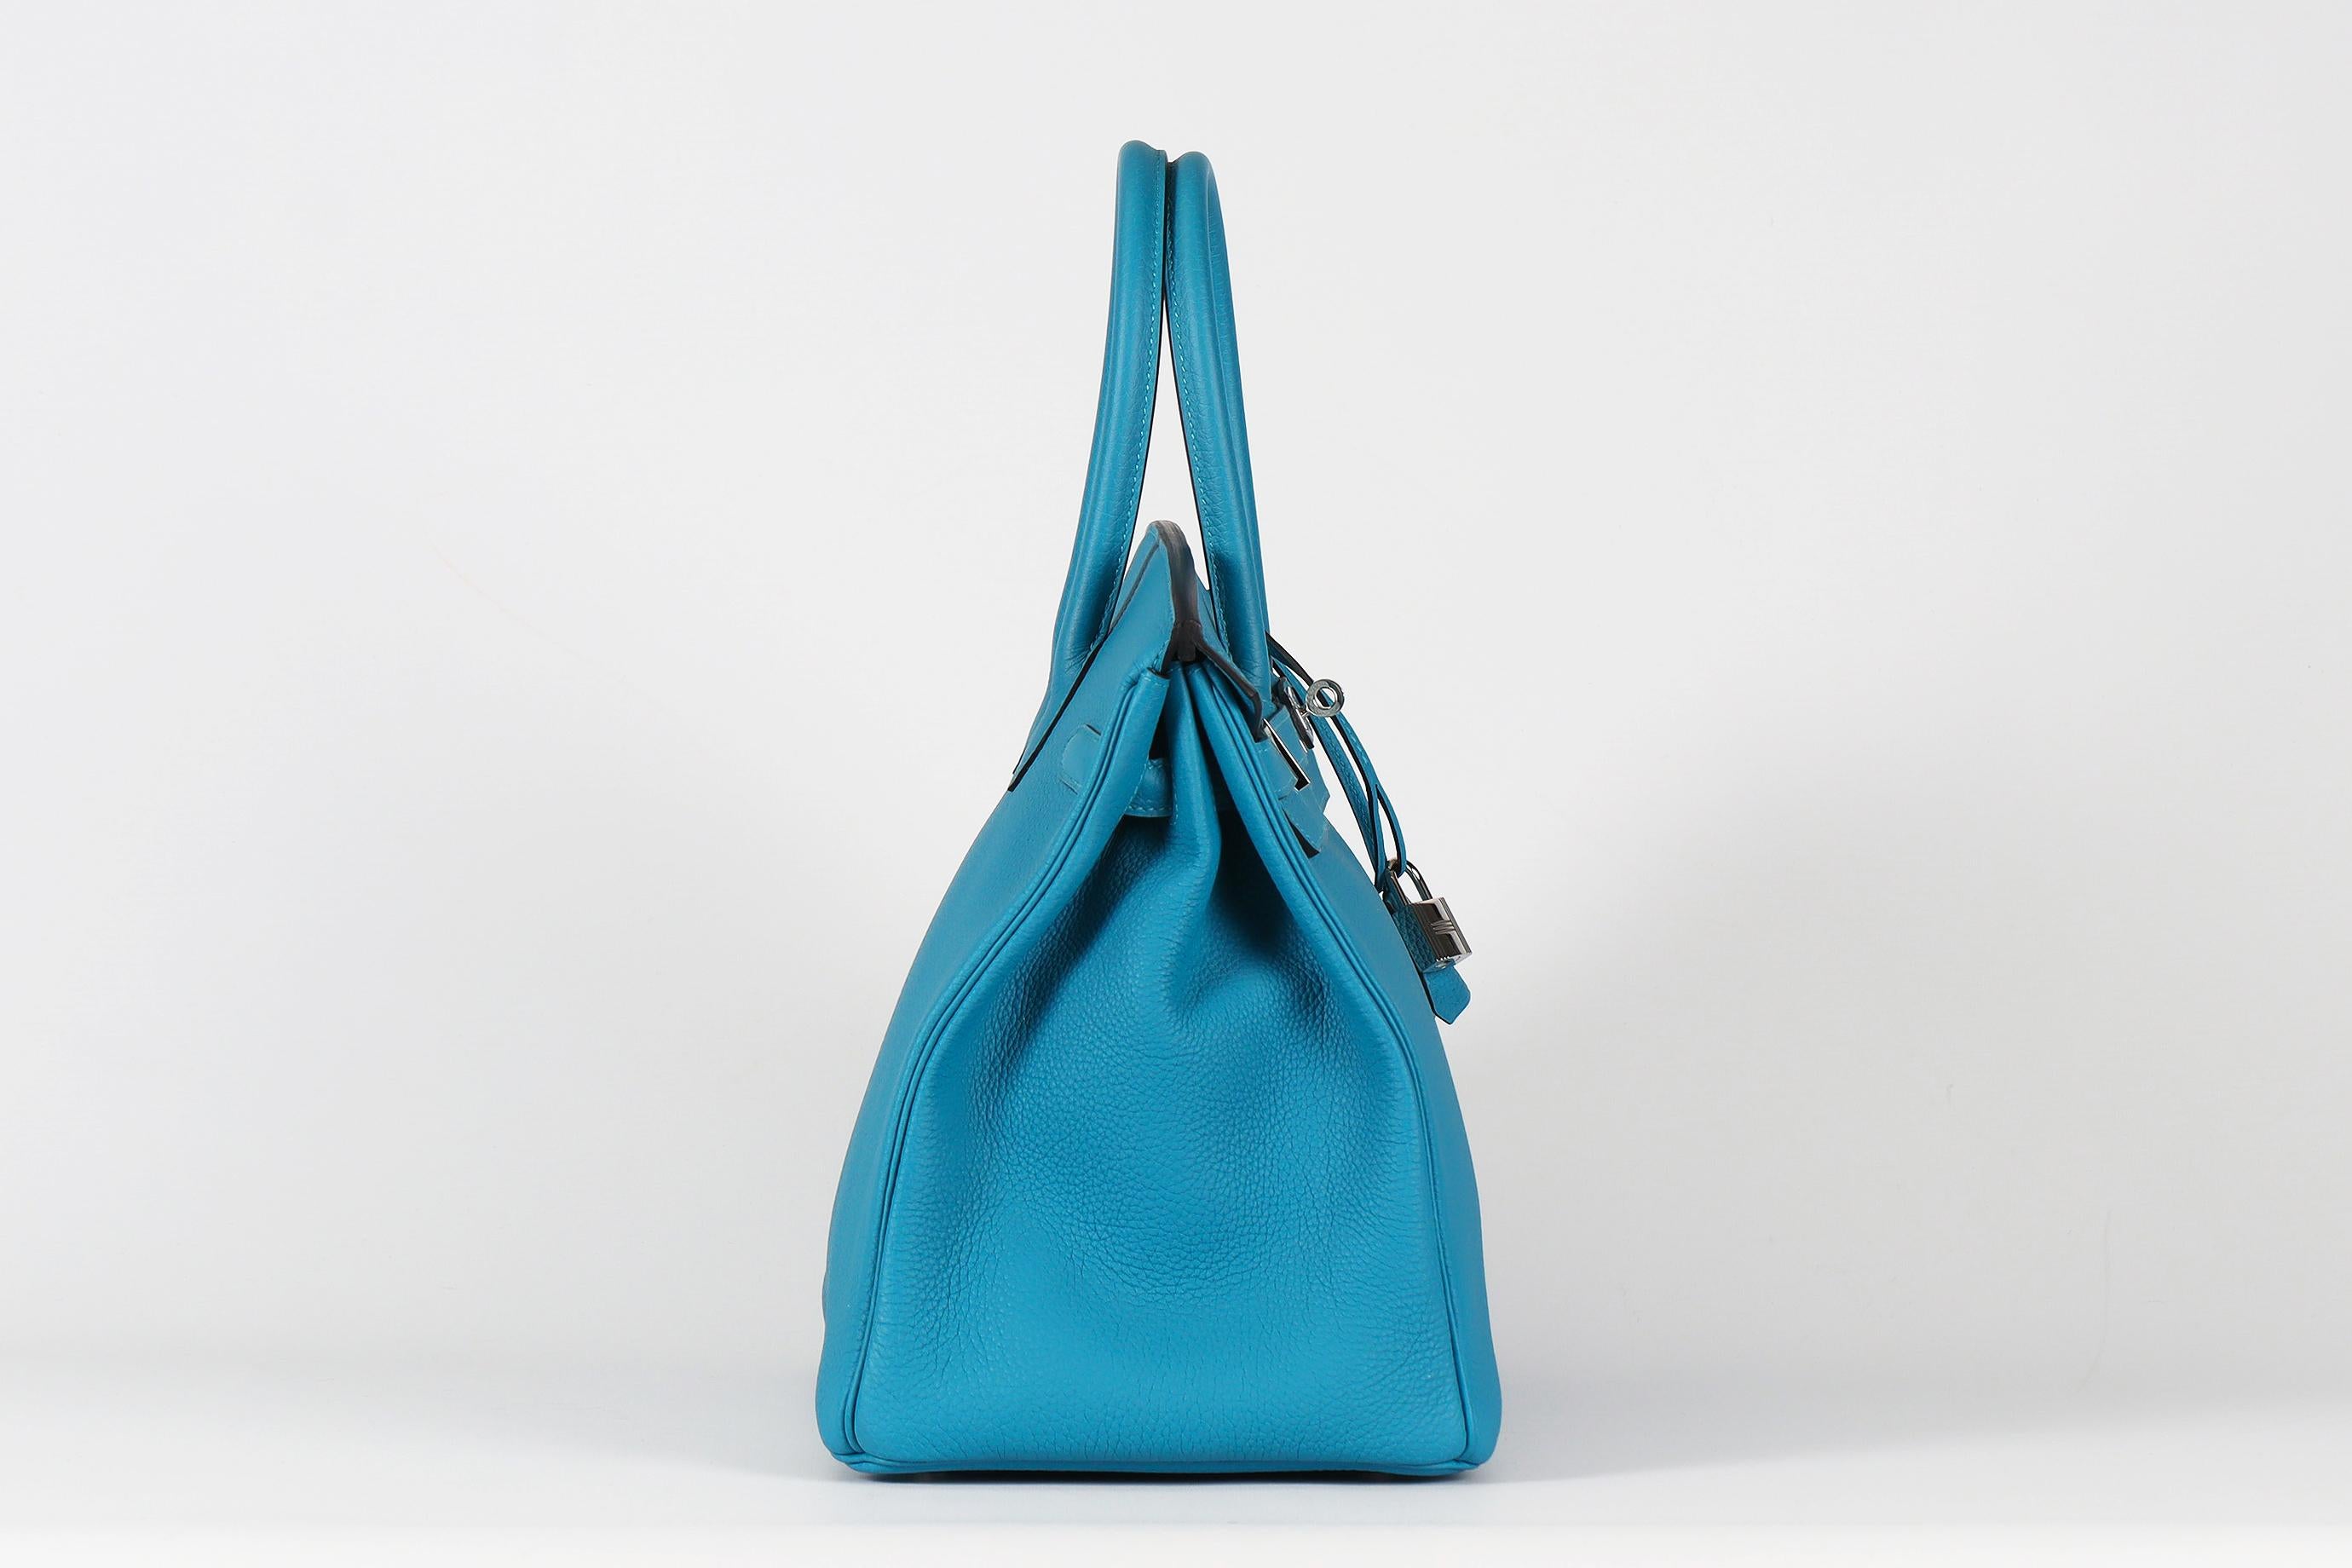 Hermès 2014 Birkin 35cm Togo Leather Bag Pour femmes en vente